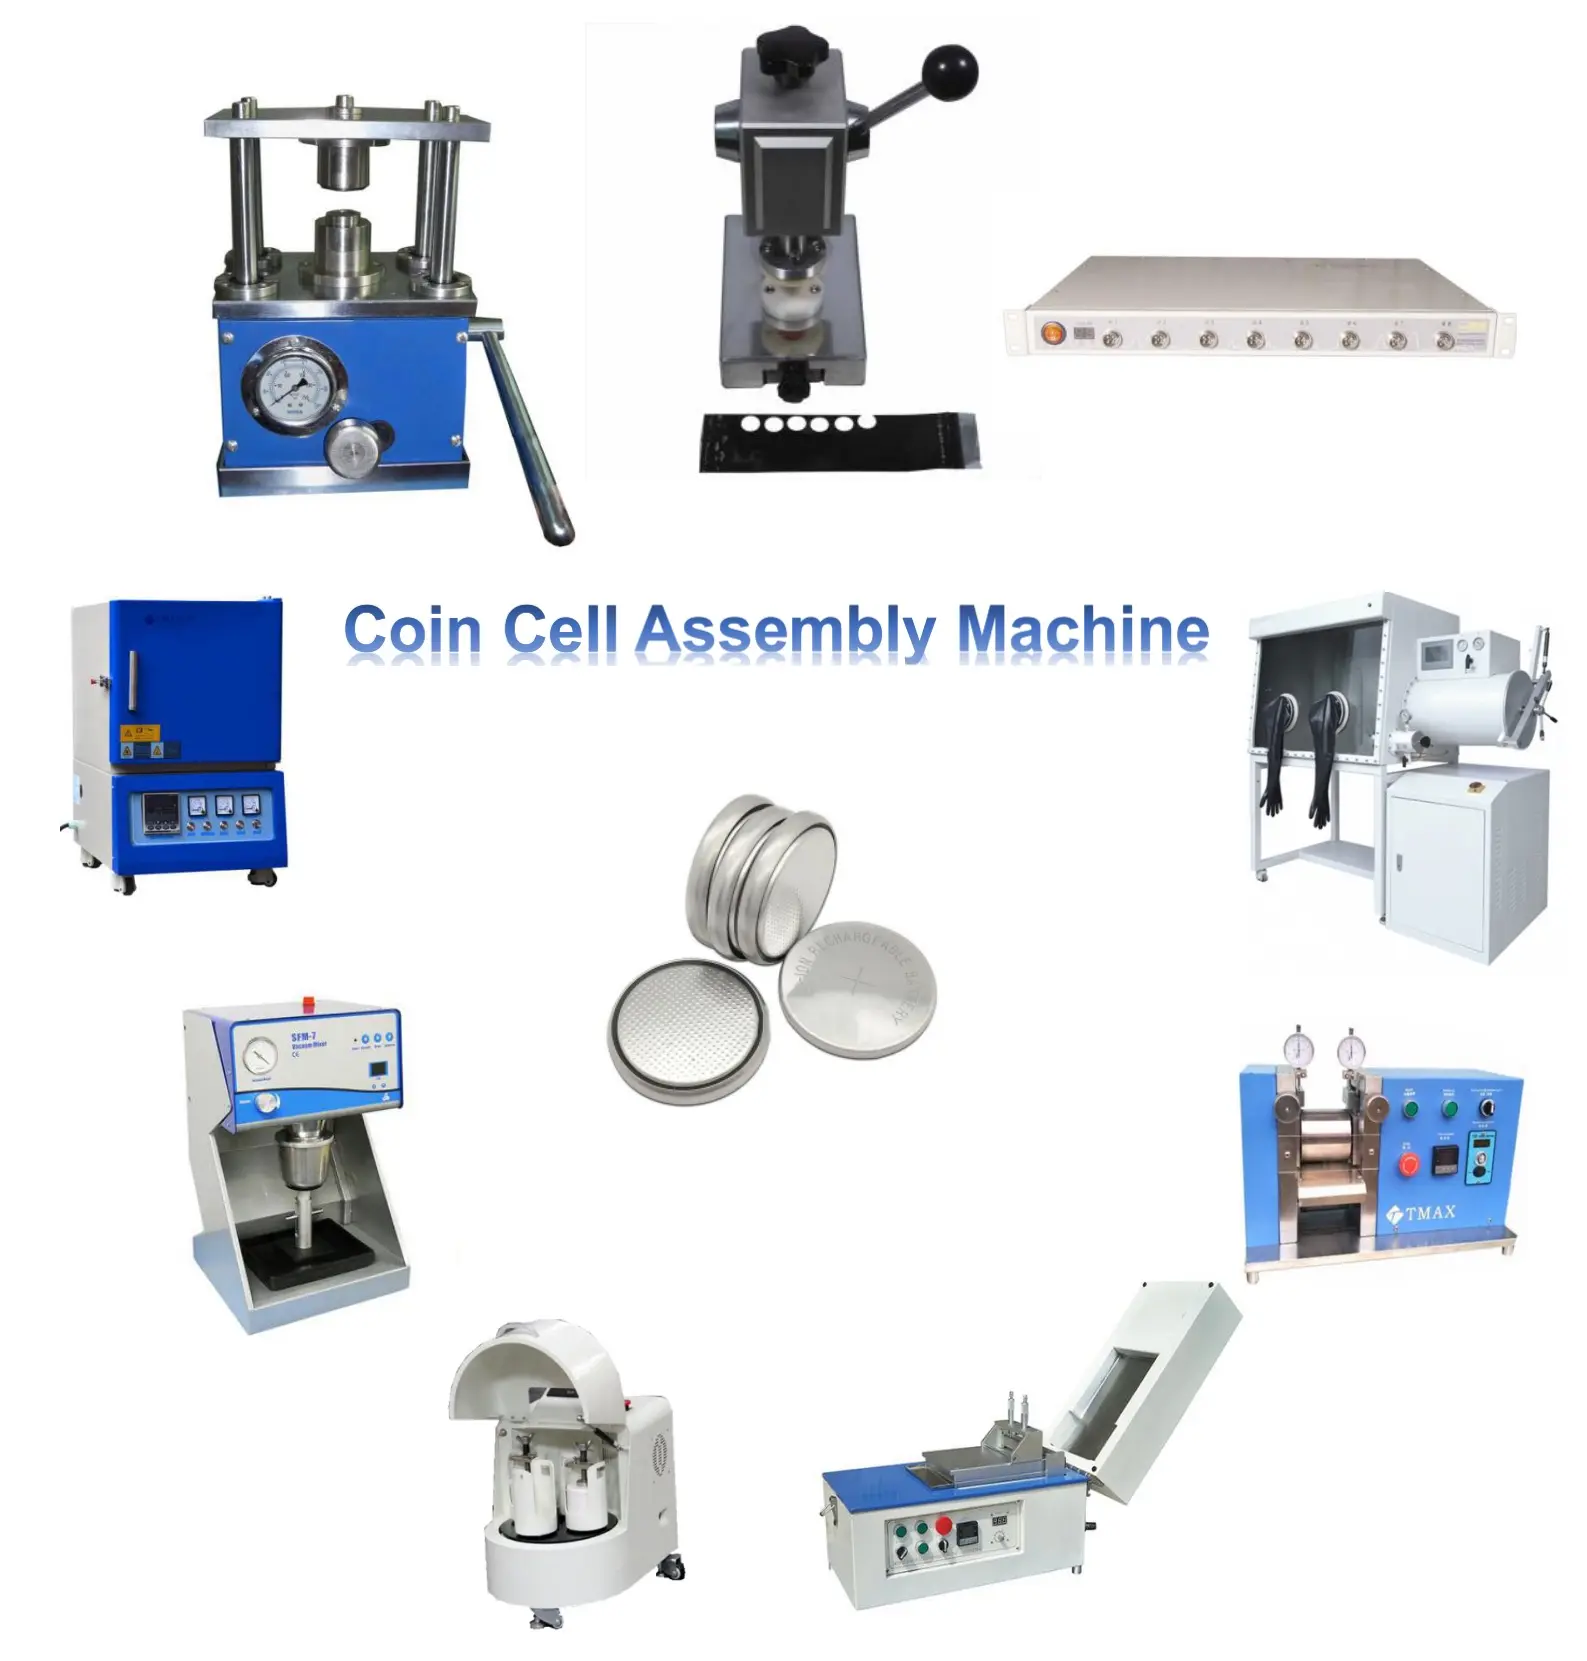 TMAX marka para hücre yapma makinesi sikke hücre hazırlama makinesi ve madeni para pili üretim hattı